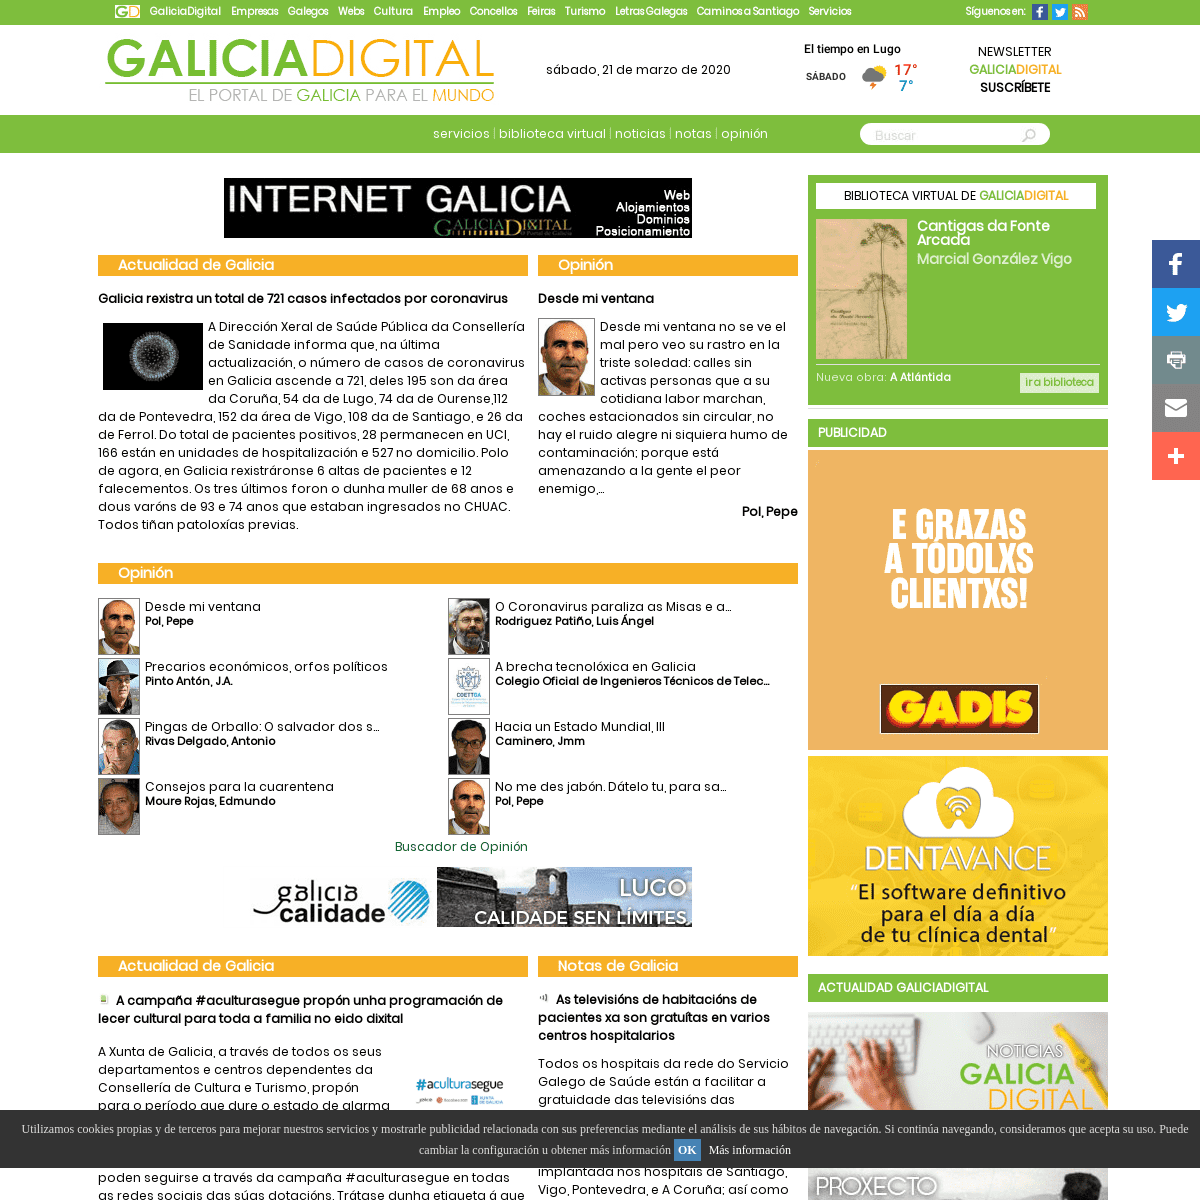 A complete backup of galiciadigital.com